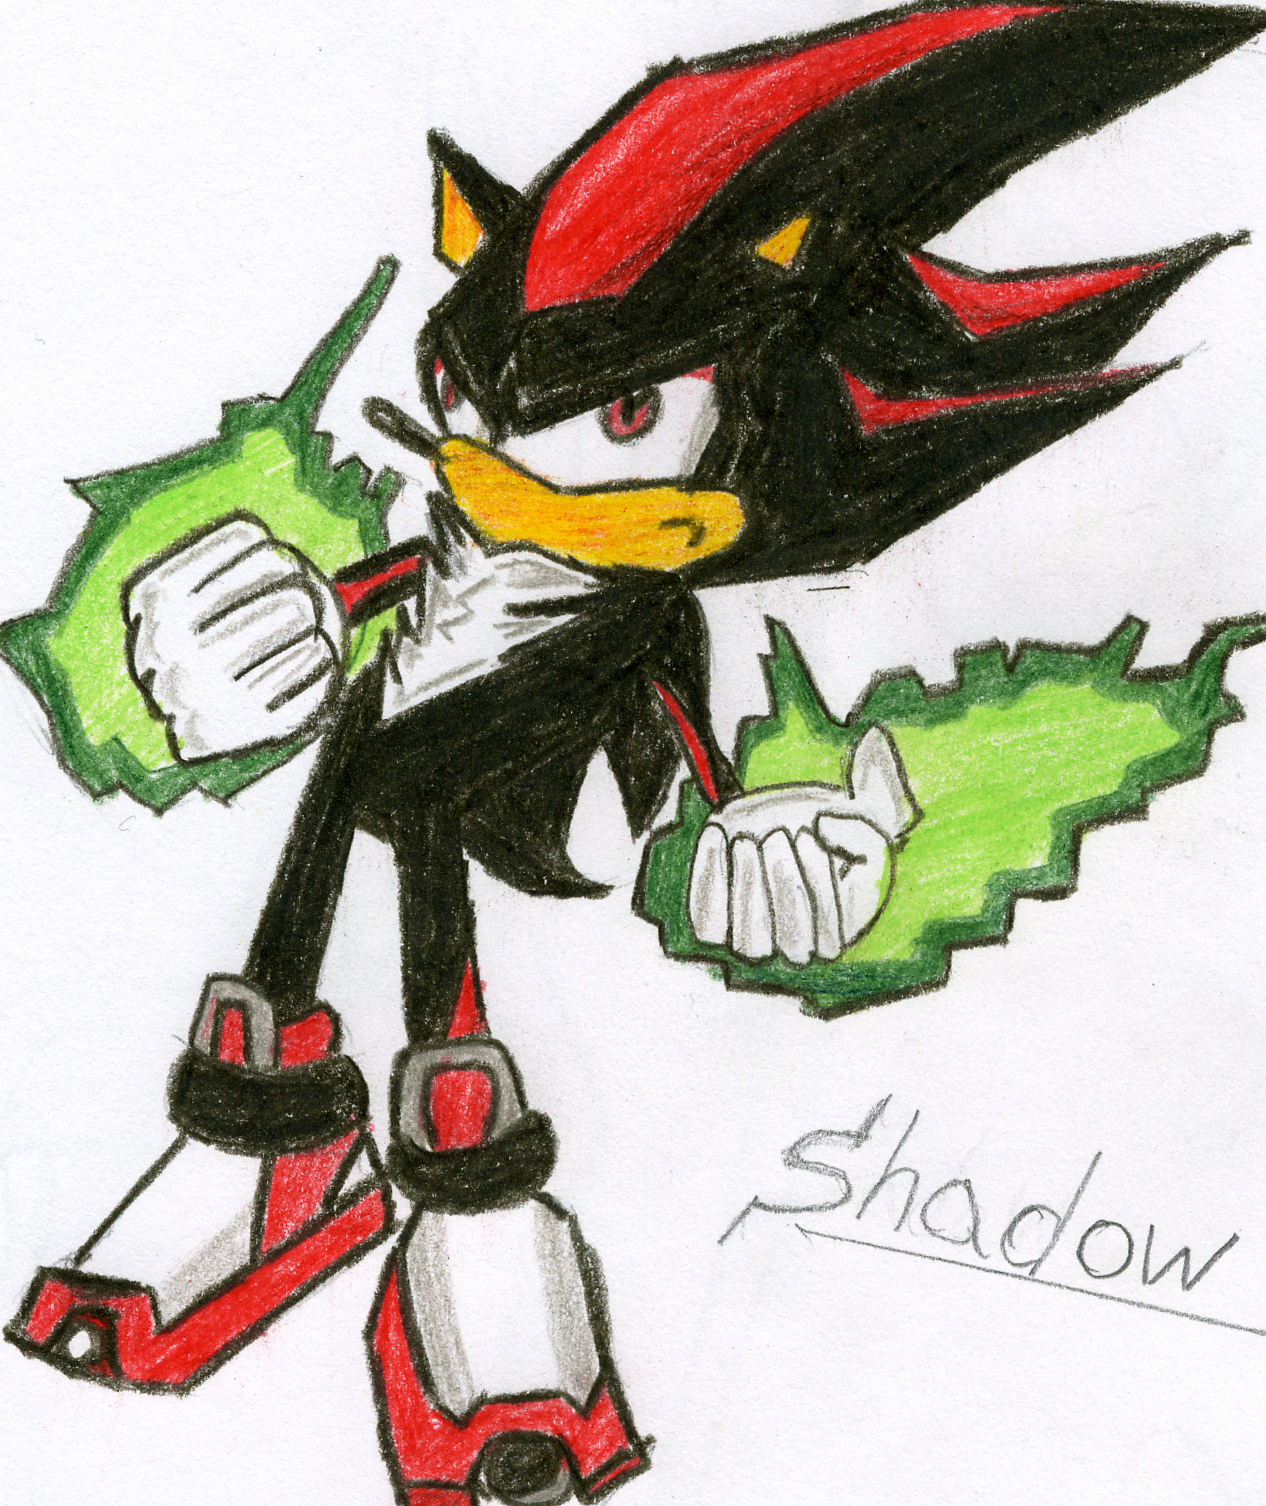 Shadow Power by art555